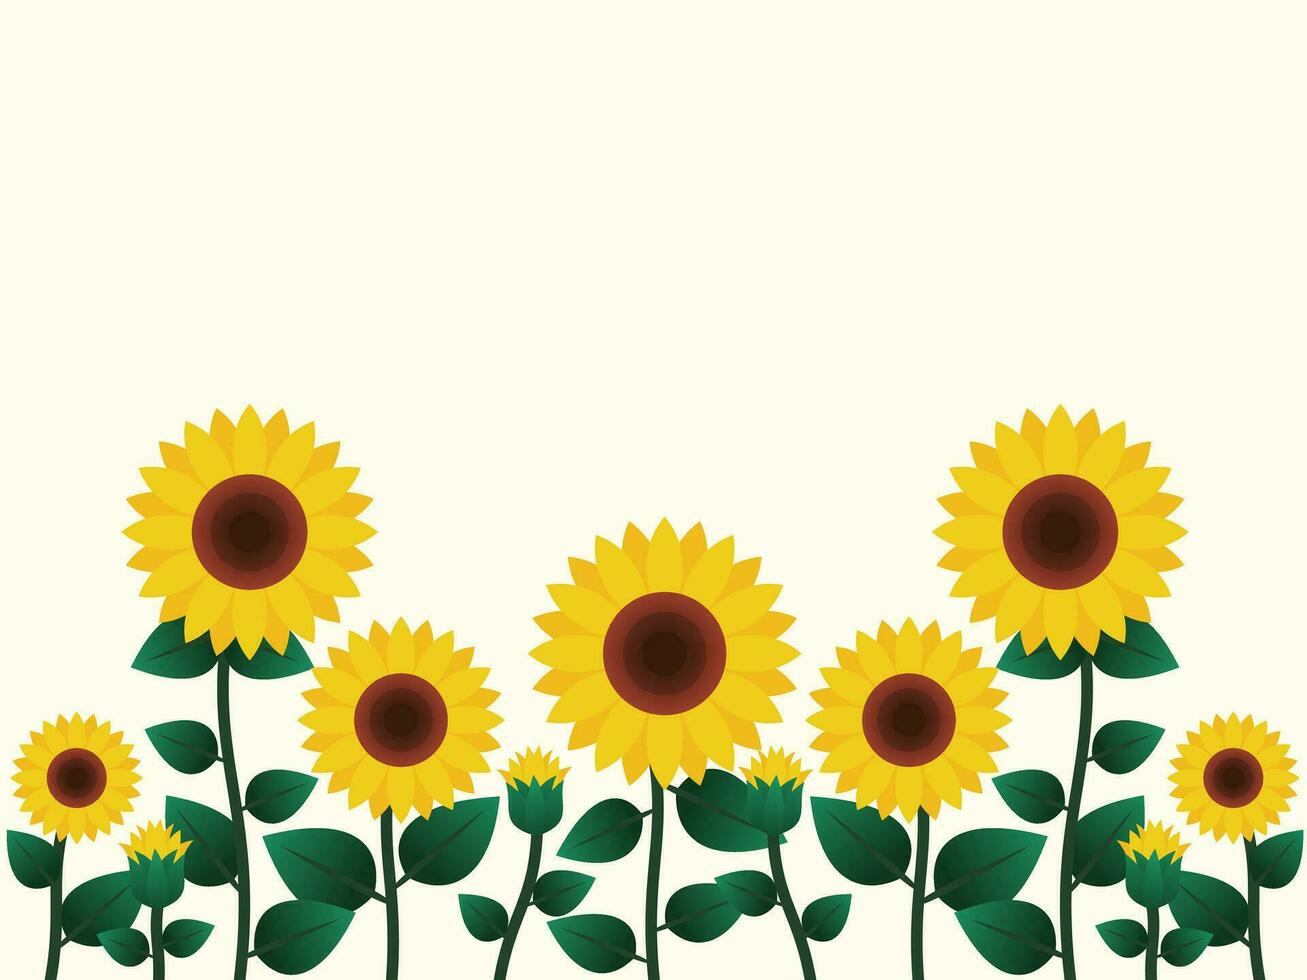 Sunflower Field Background Flat Design Vector Illustration.